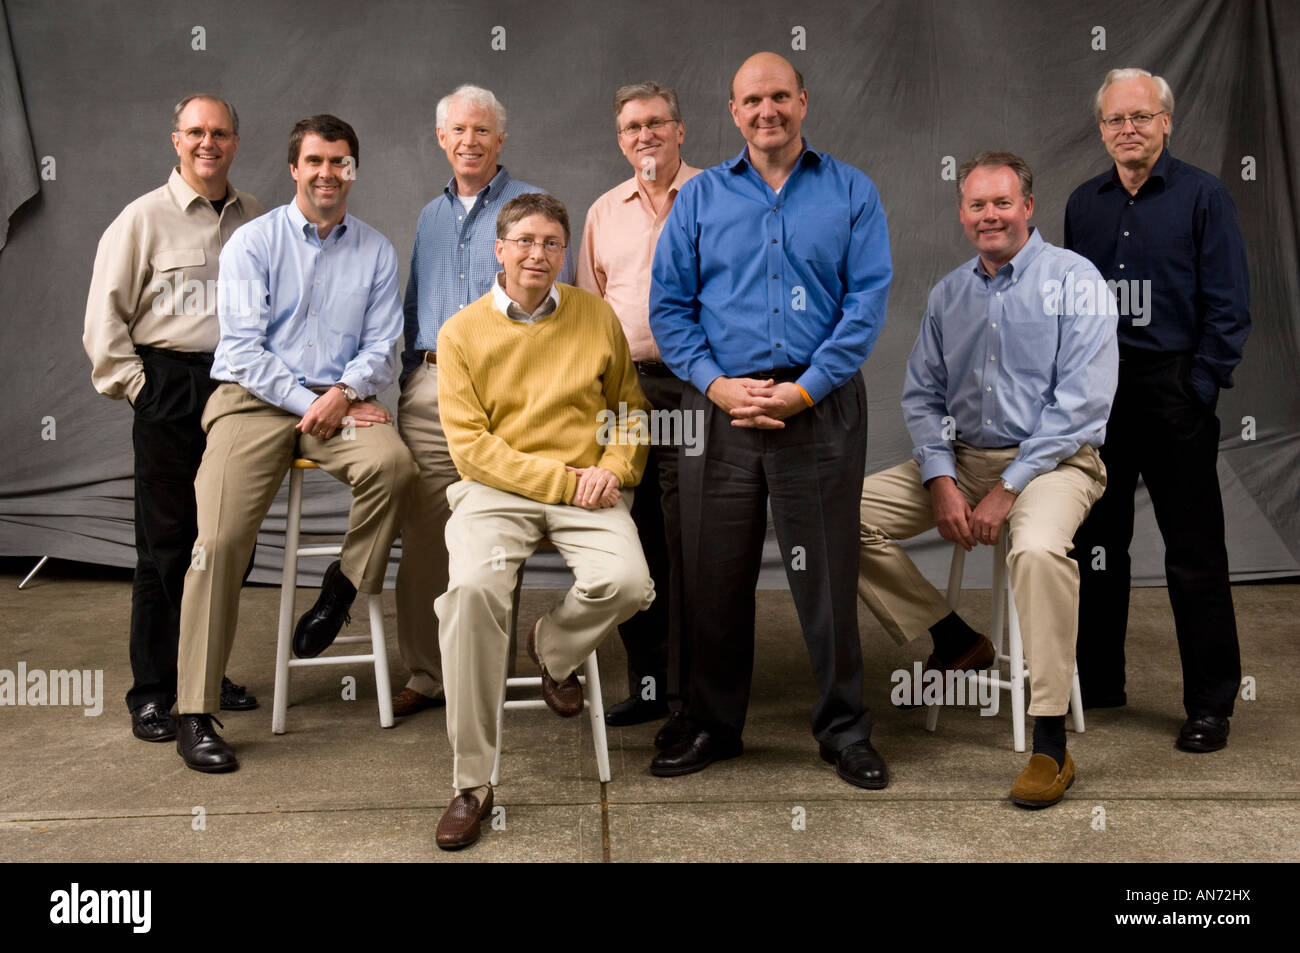 June 14 2006 Microsoft senior leadership team photographed at a corporate gathering at Ballmer's Hunts Point Washington home Stock Photo